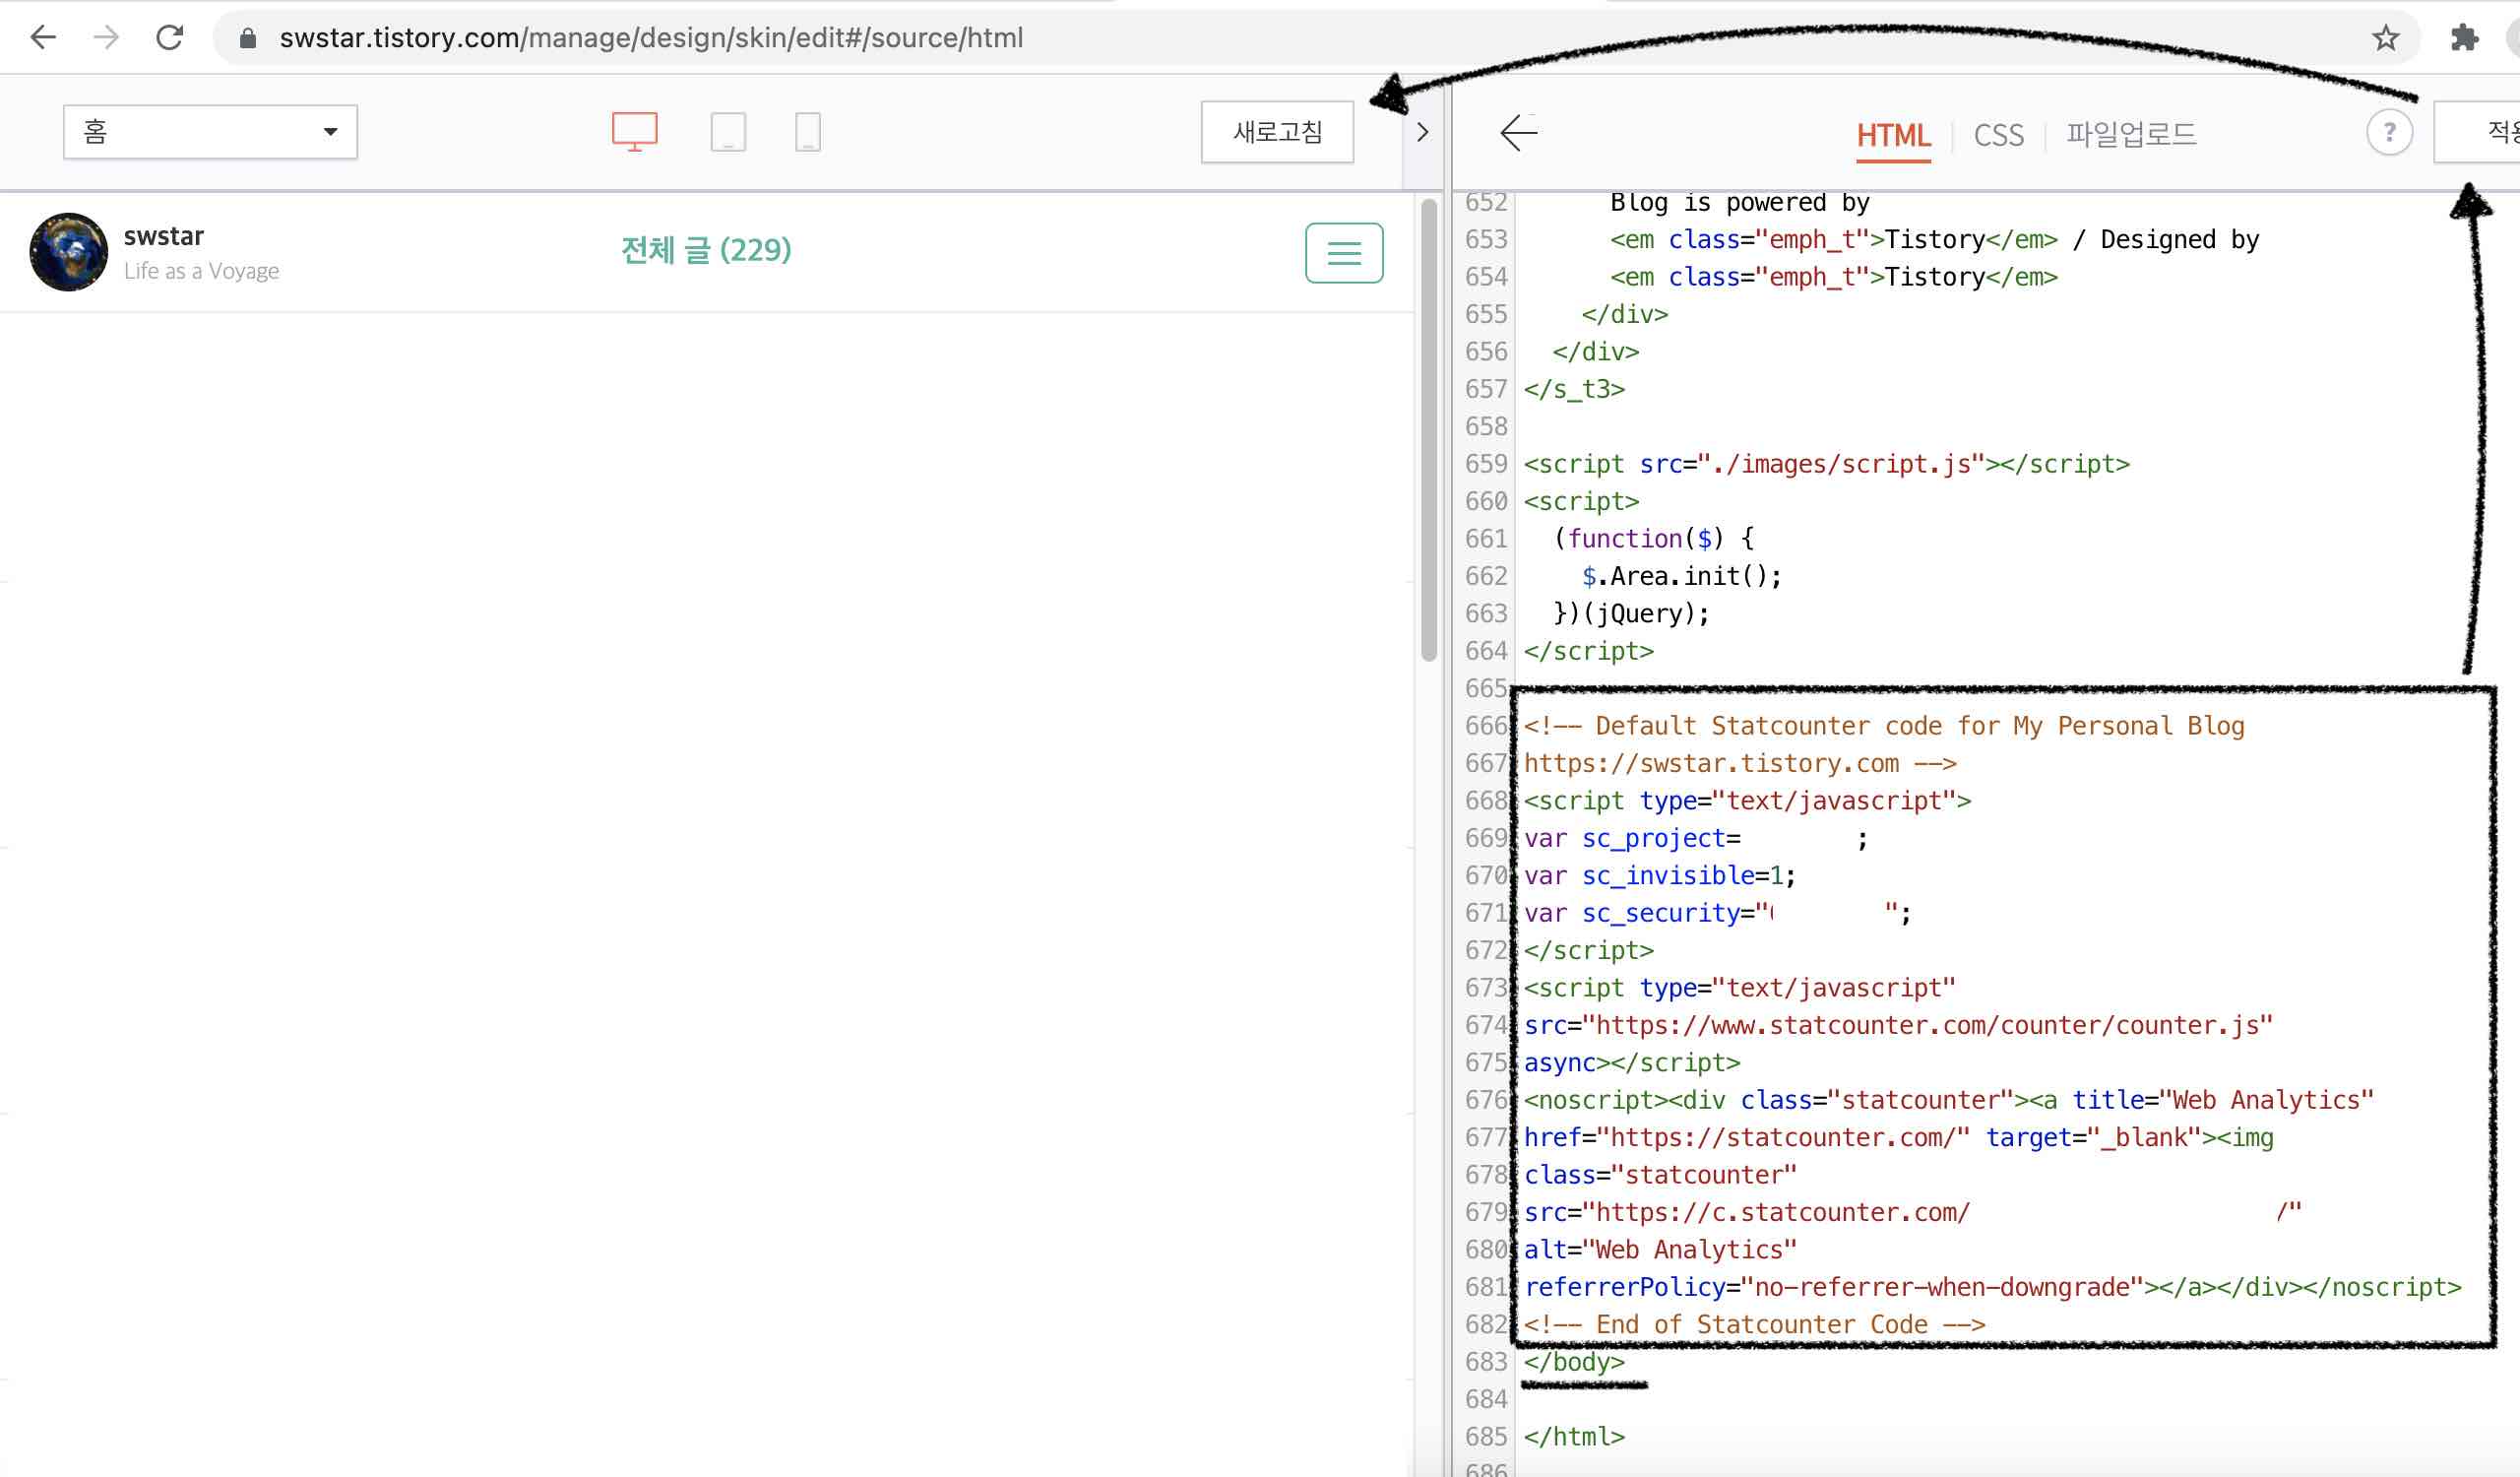 screenshot of Tistory skin editor, showing tracking code of statcounter